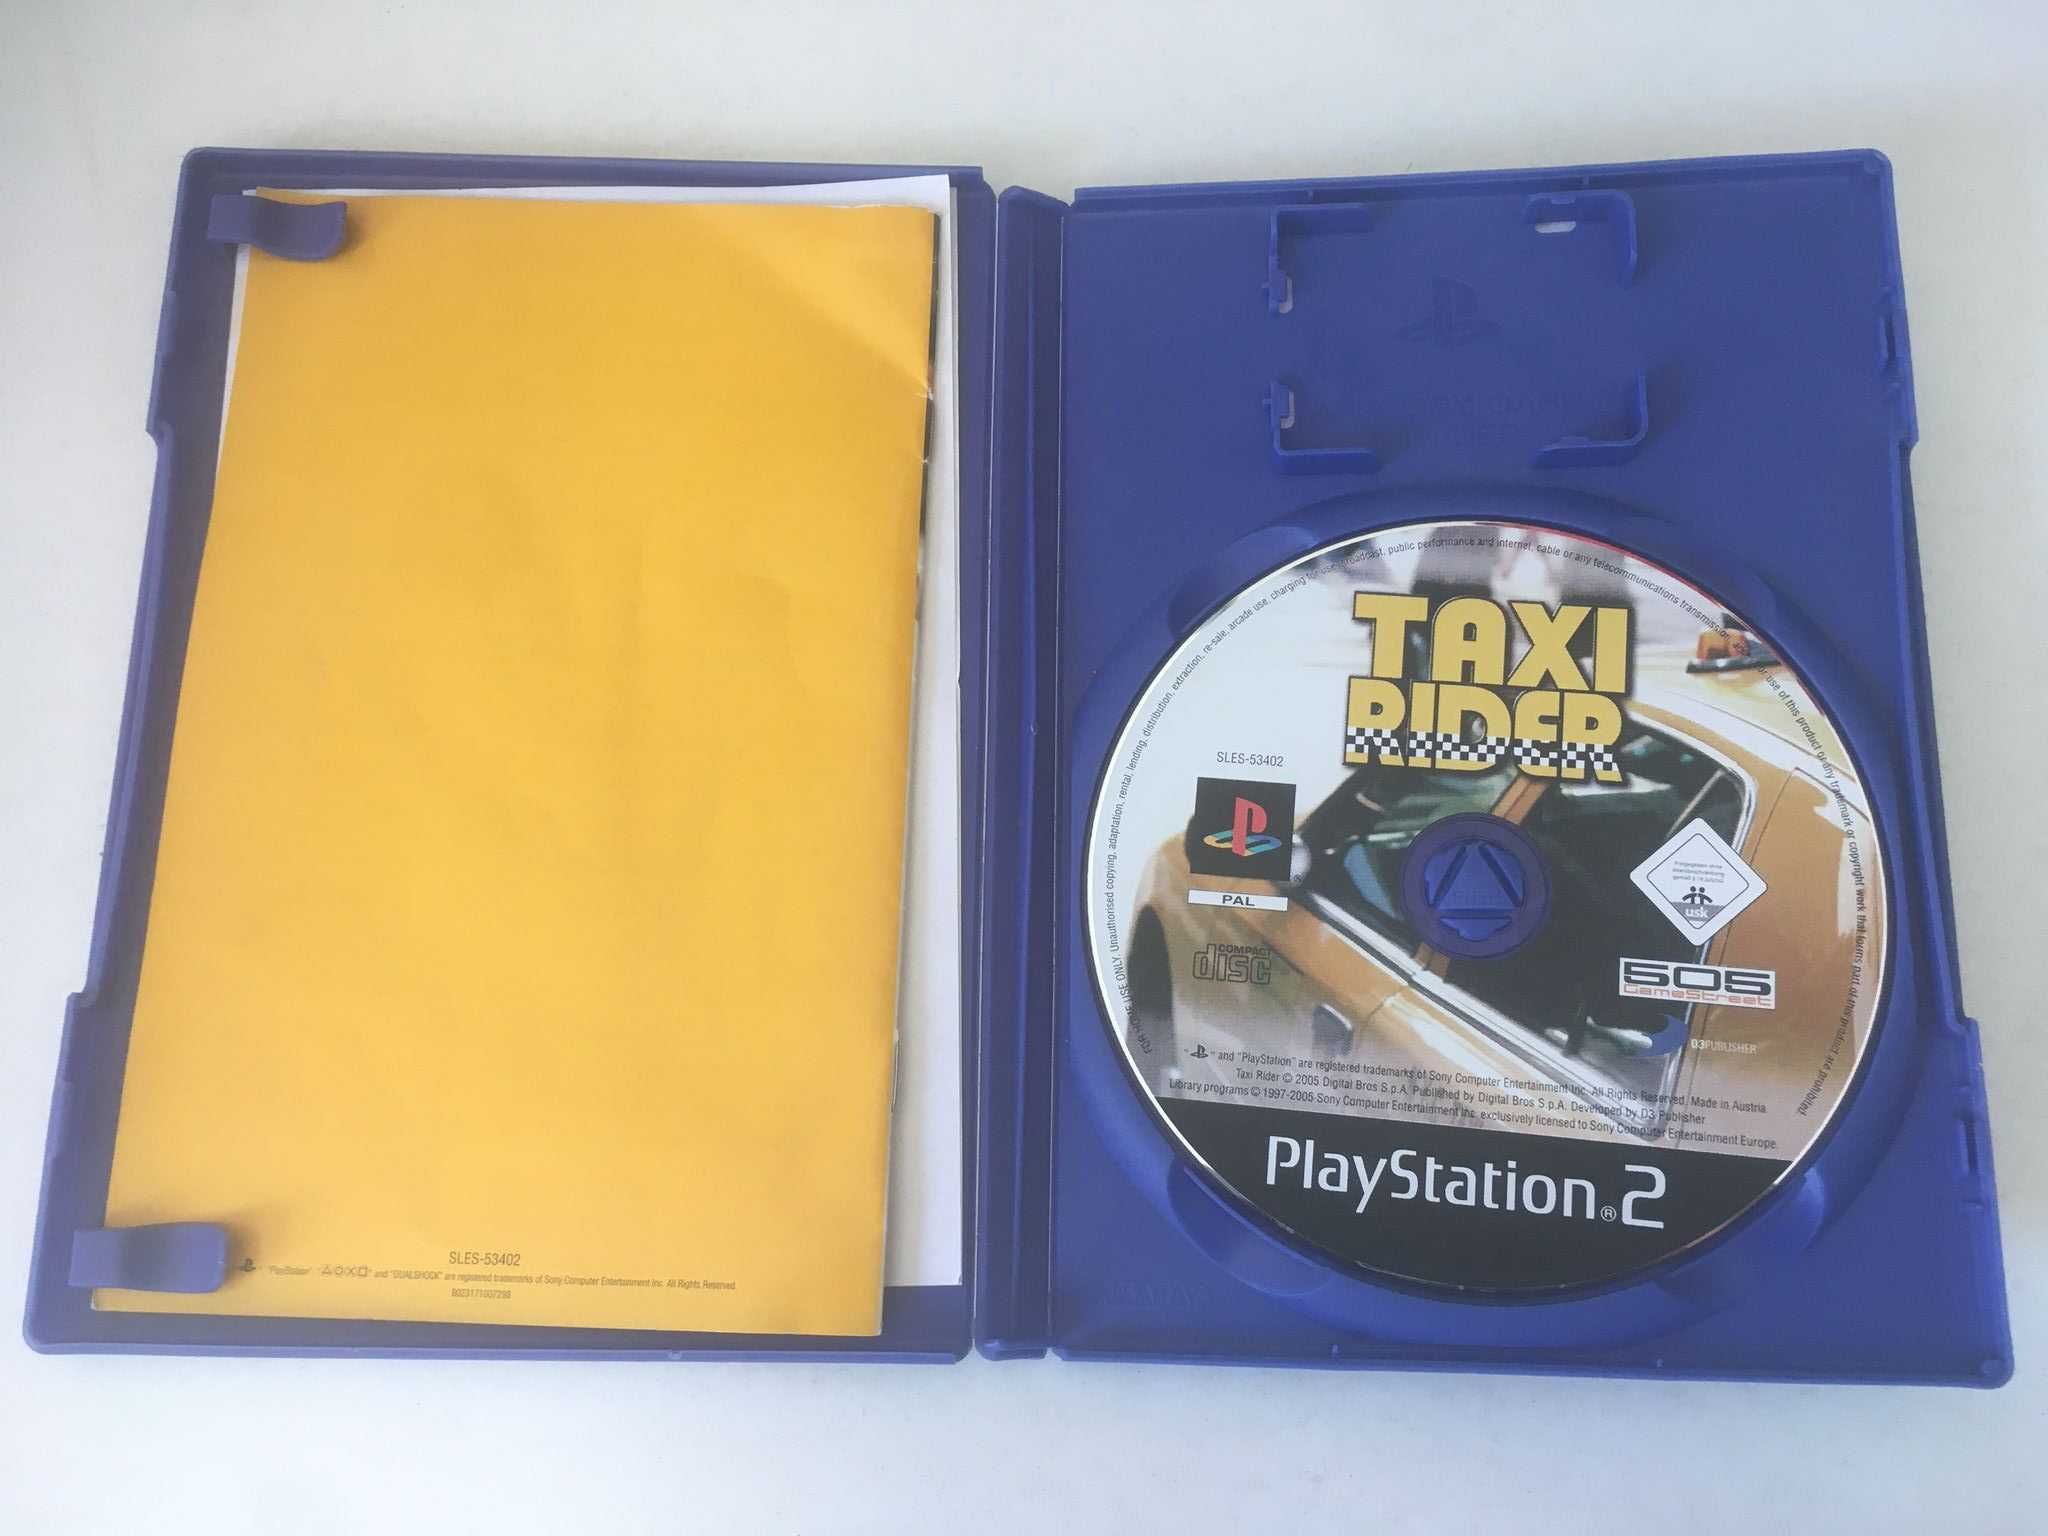 PS2 - Taxi Rider